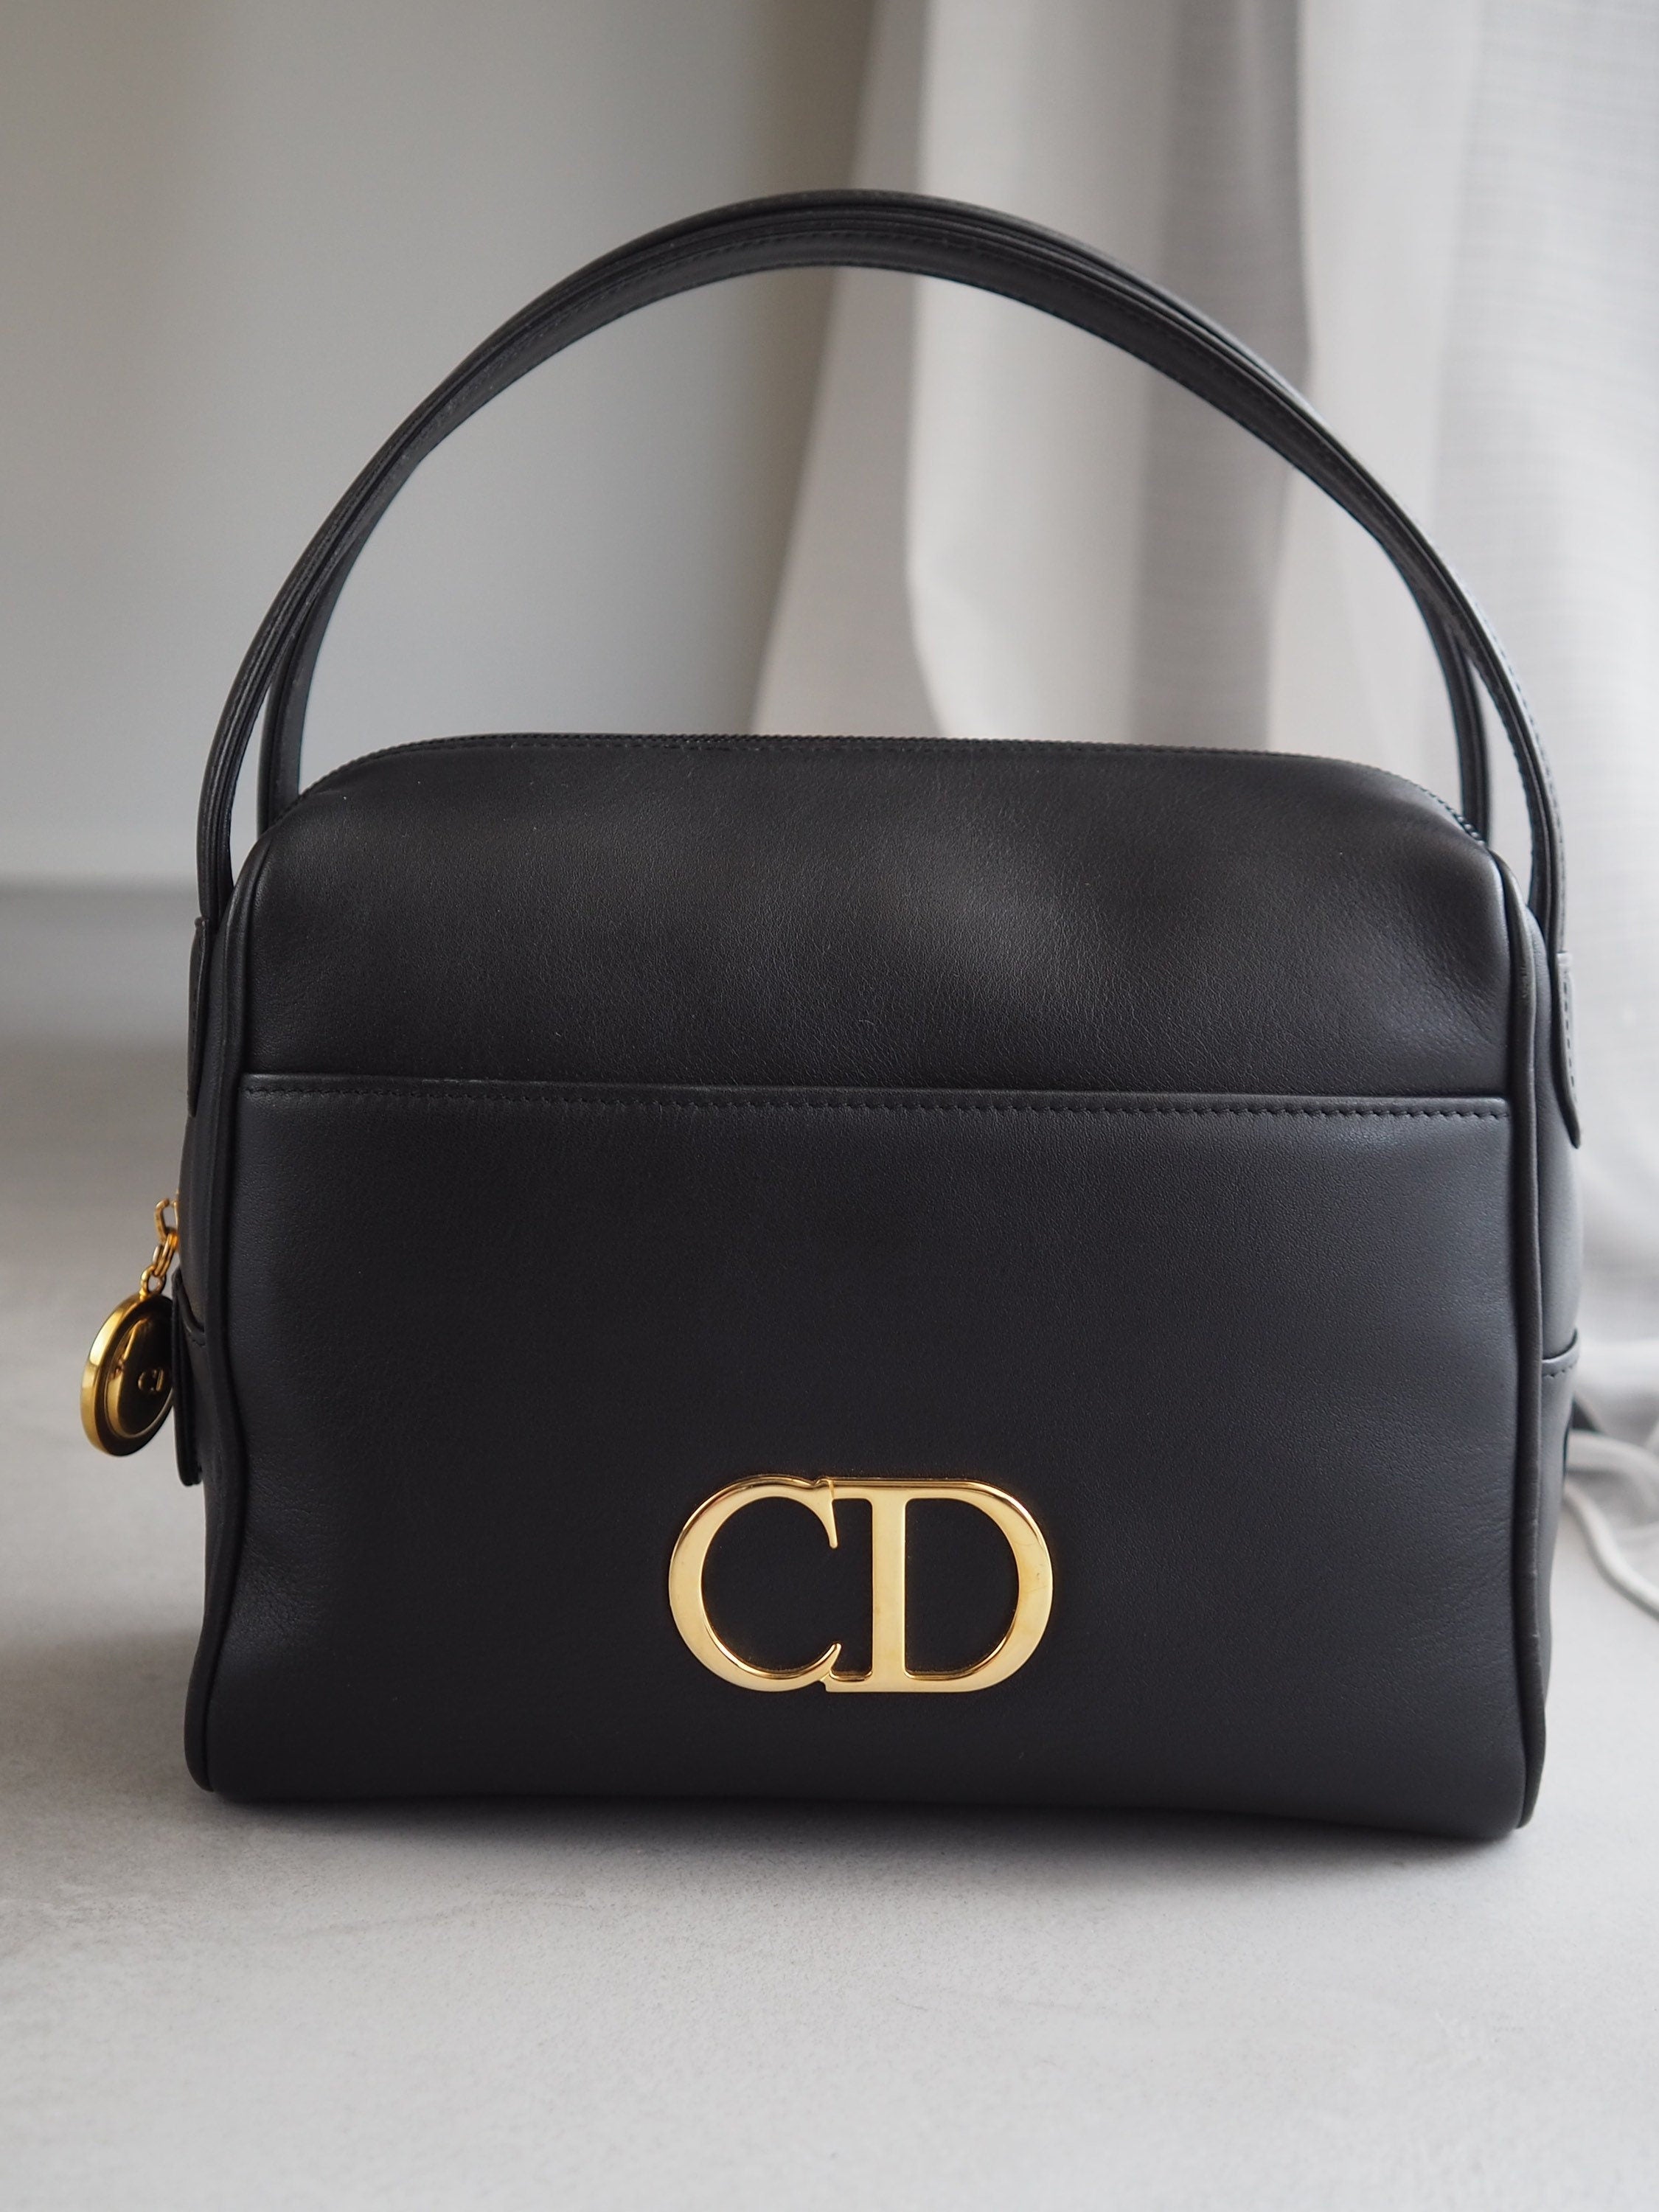 Christian Dior CD Logo Hand bag Black Leather Authentic